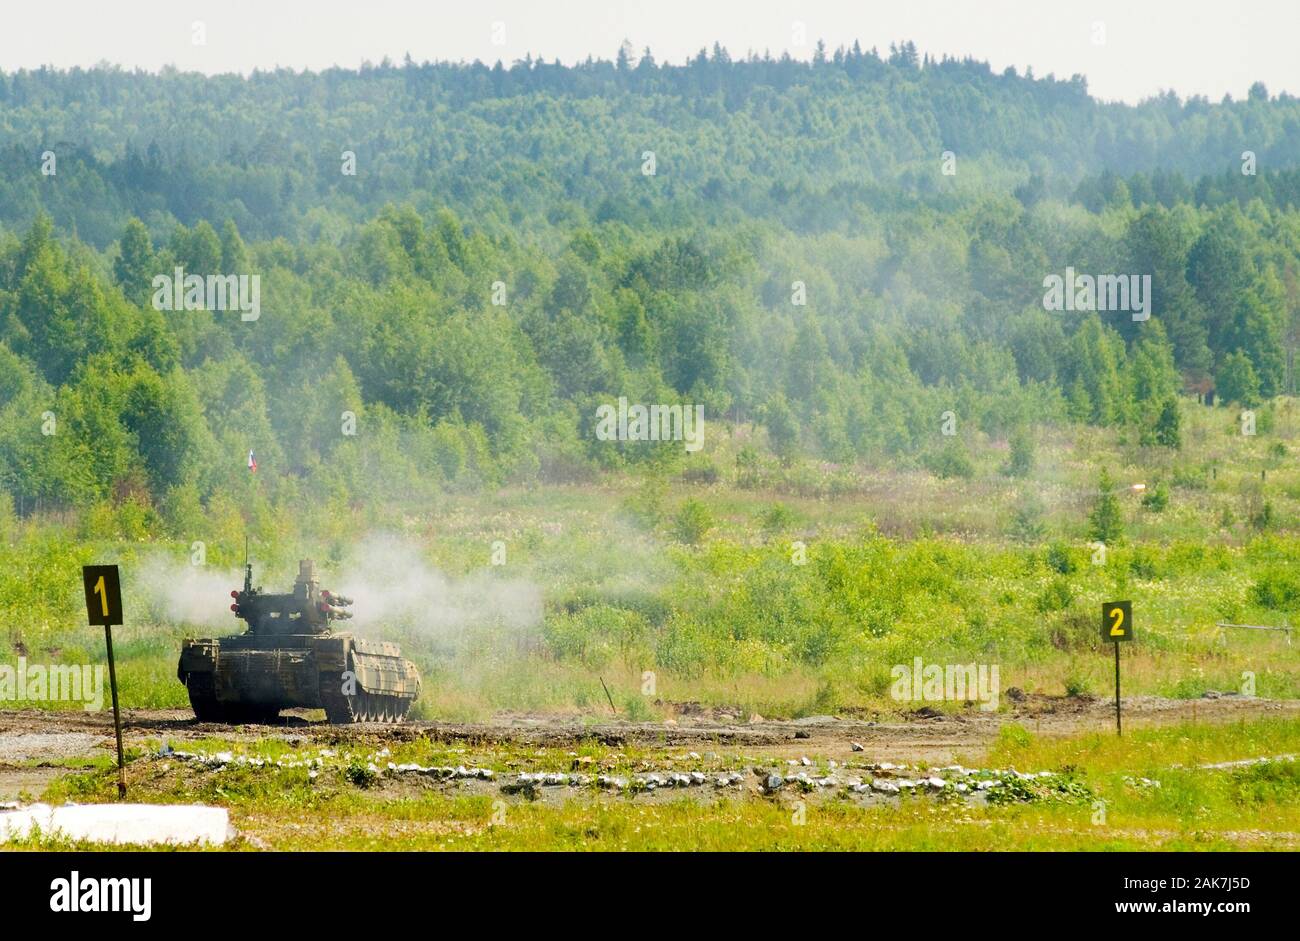 Terminator Tank Support Fighting Vehicle. Russia Stock Photo